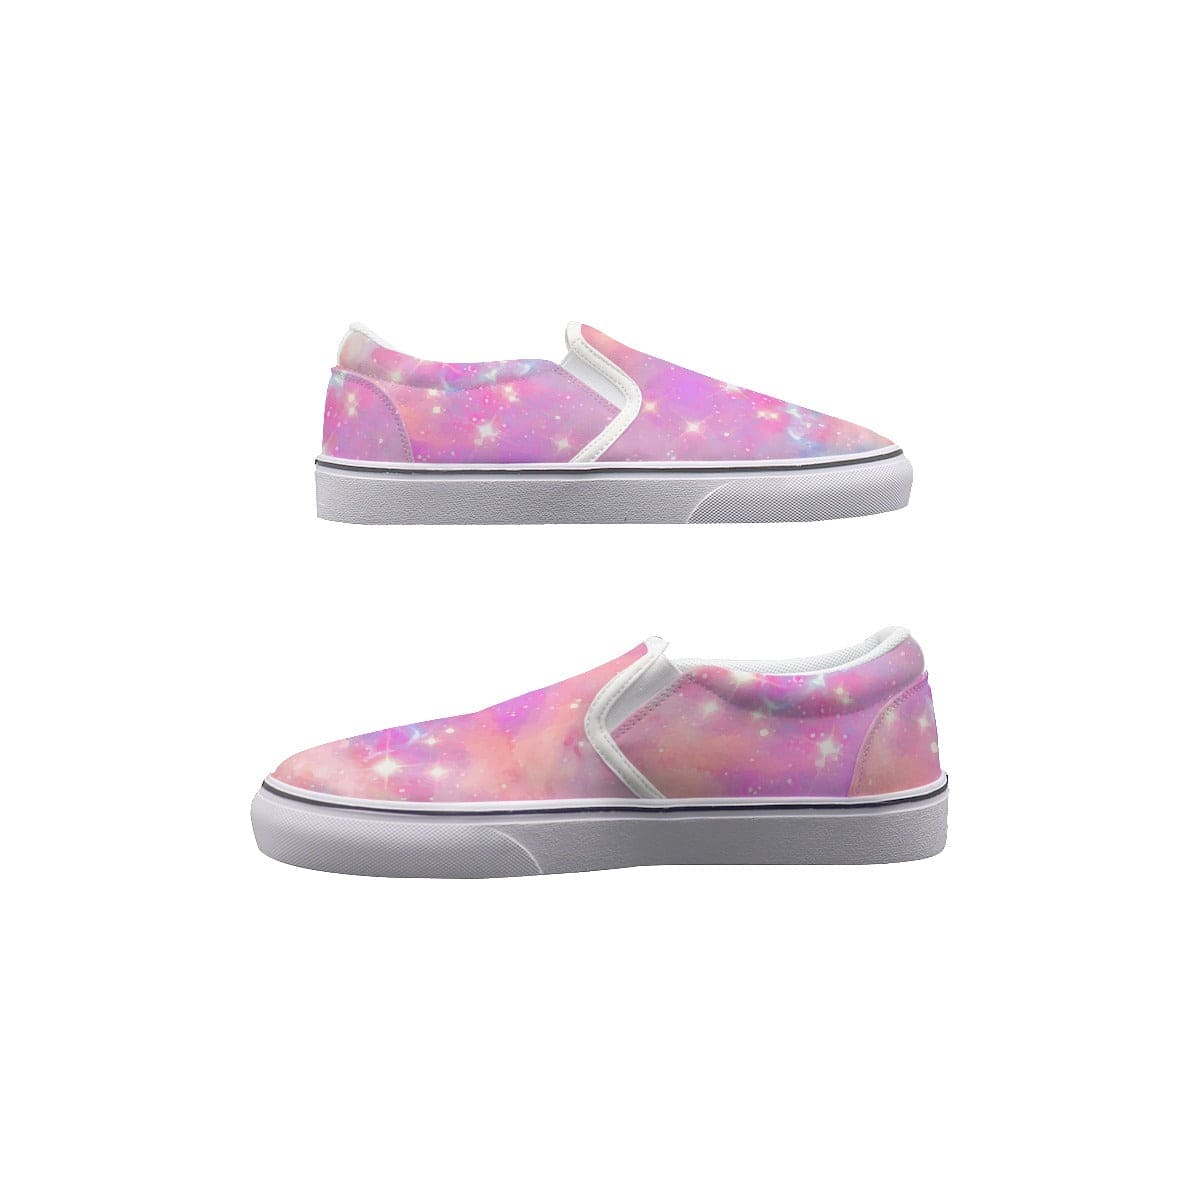 Yoycol Sparkling Stardust - Women's Slip On Sneakers